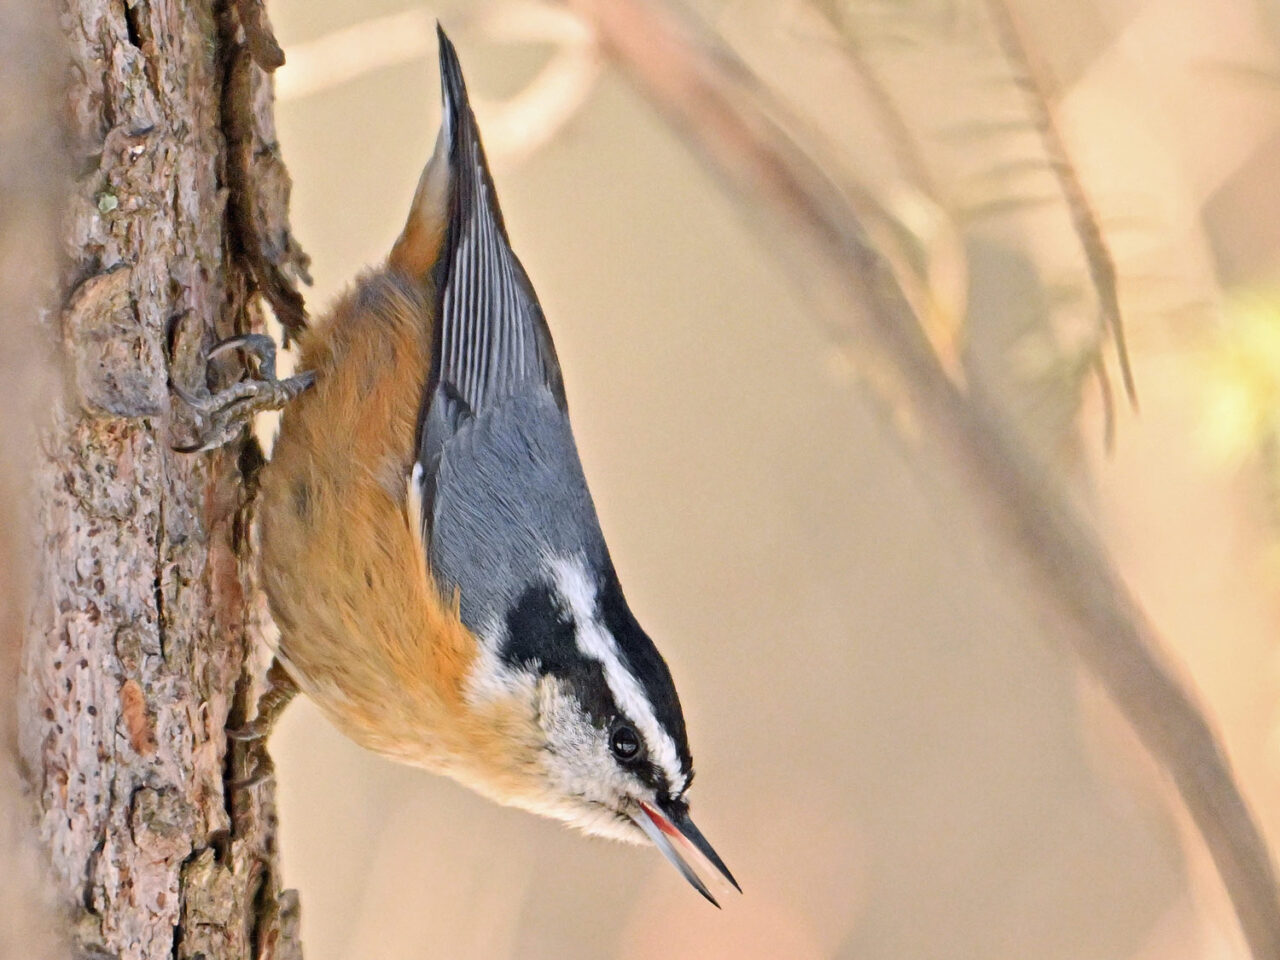 A small, plump songbird walks head-first down a tree trunk.